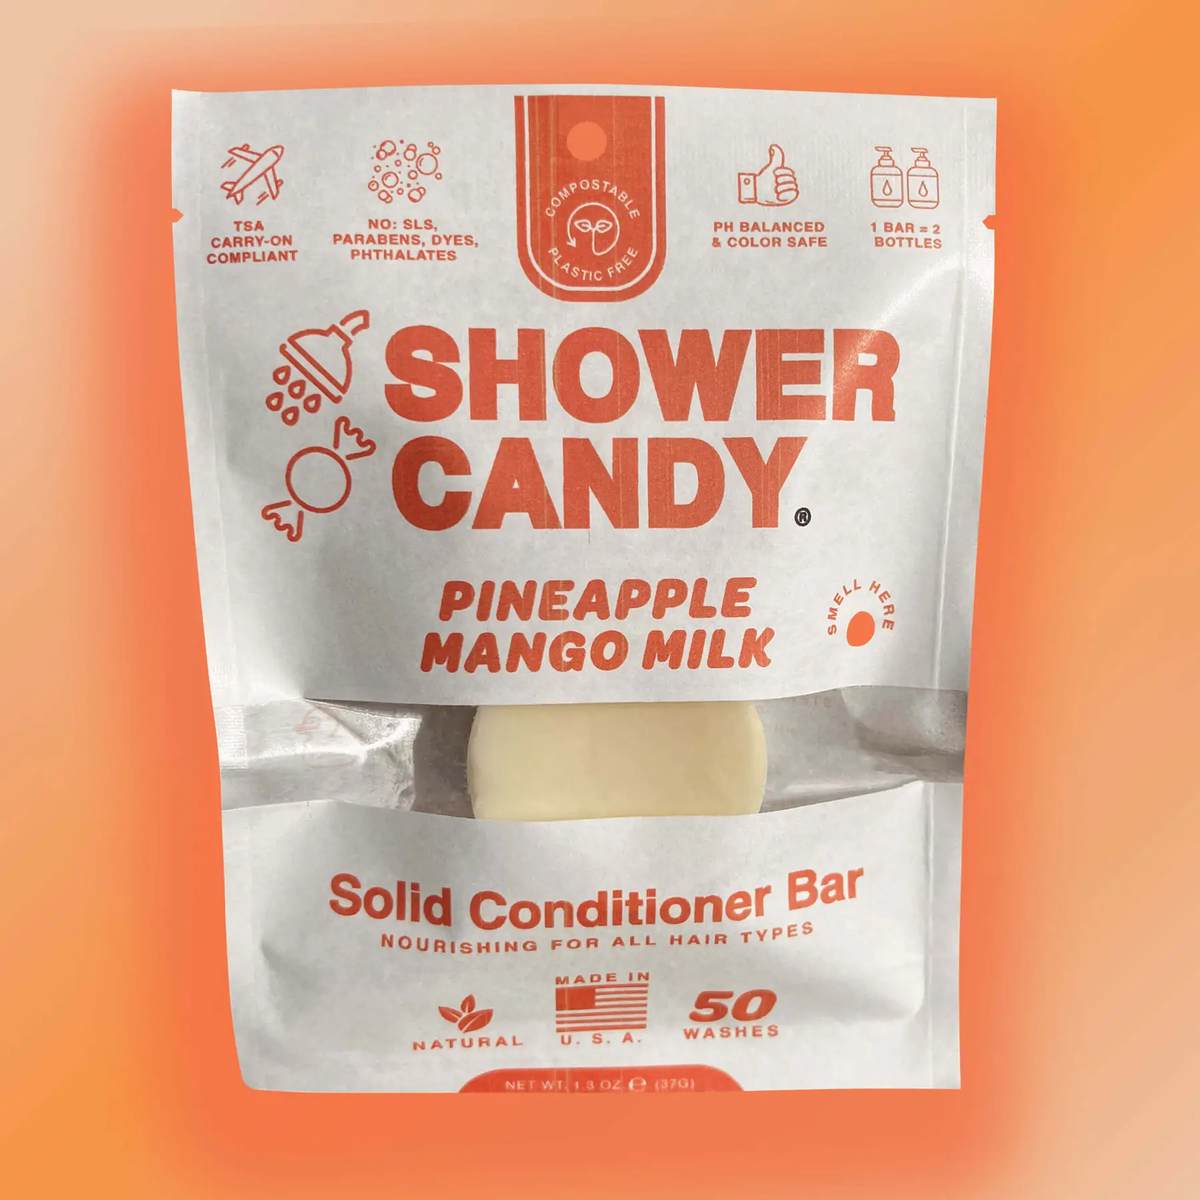 Shower Candy - Pineapple Mango Milk Conditioner Bar